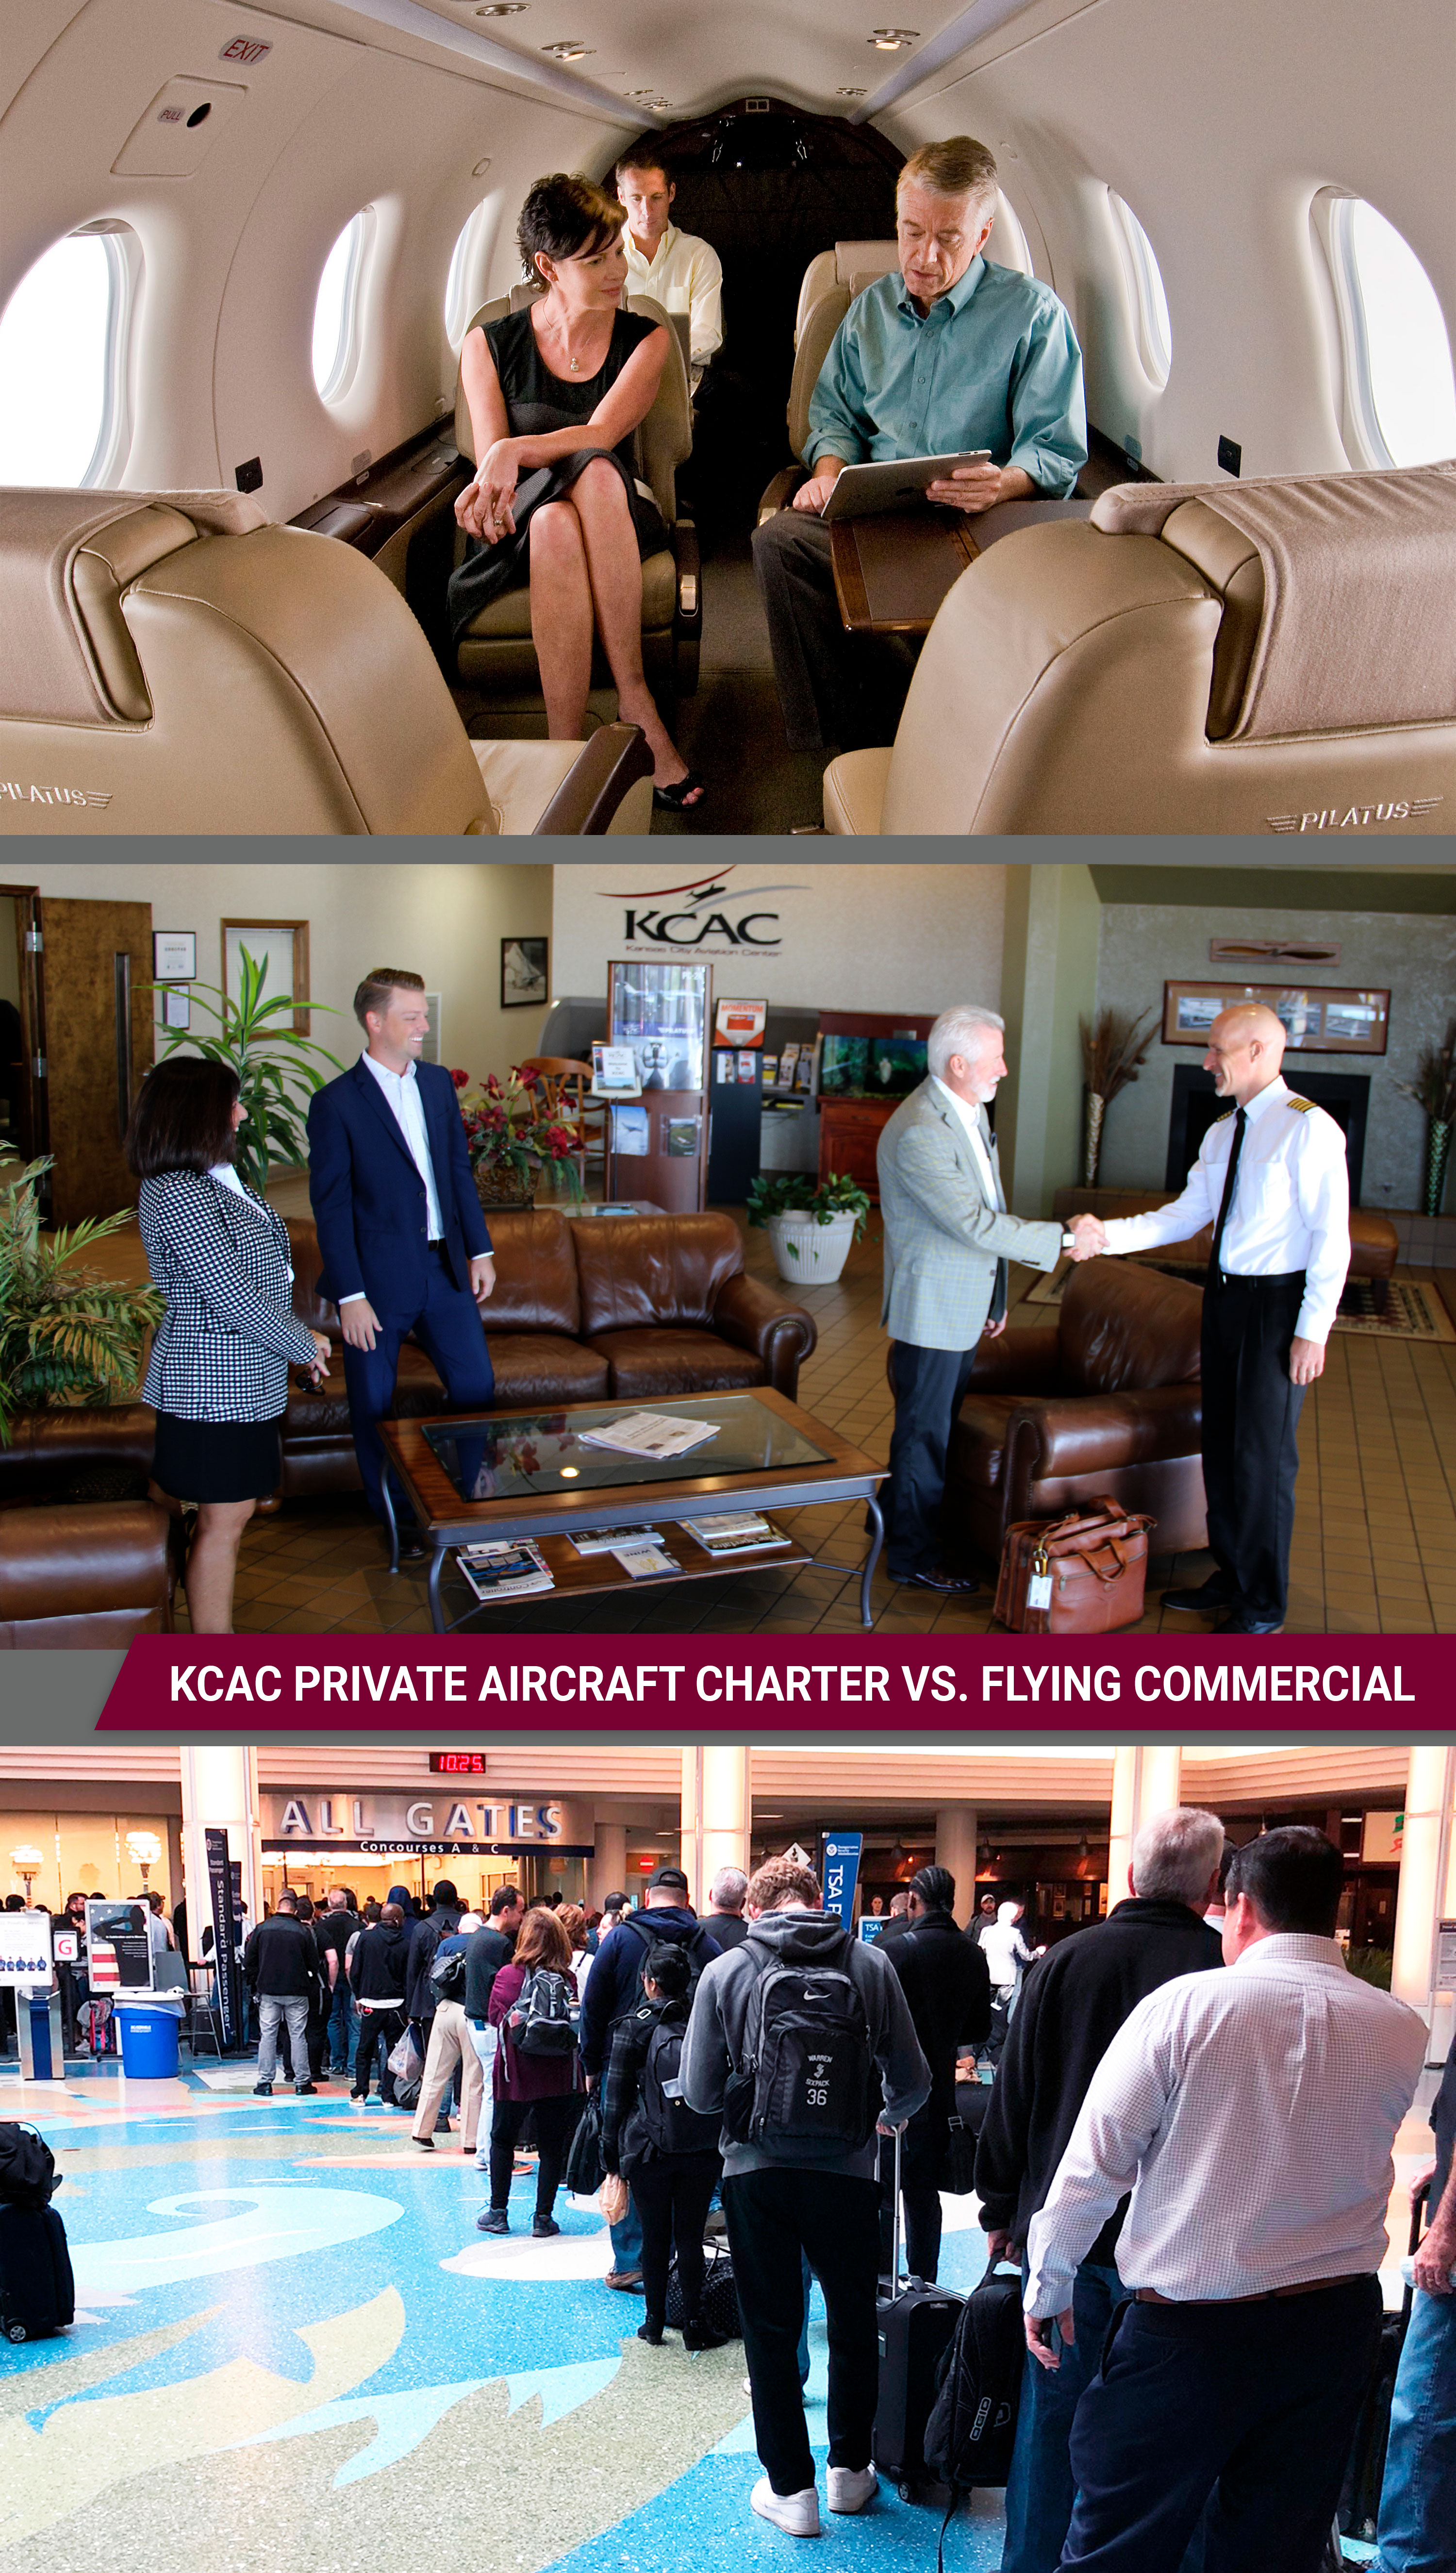 commercial vs charter flight info graphic